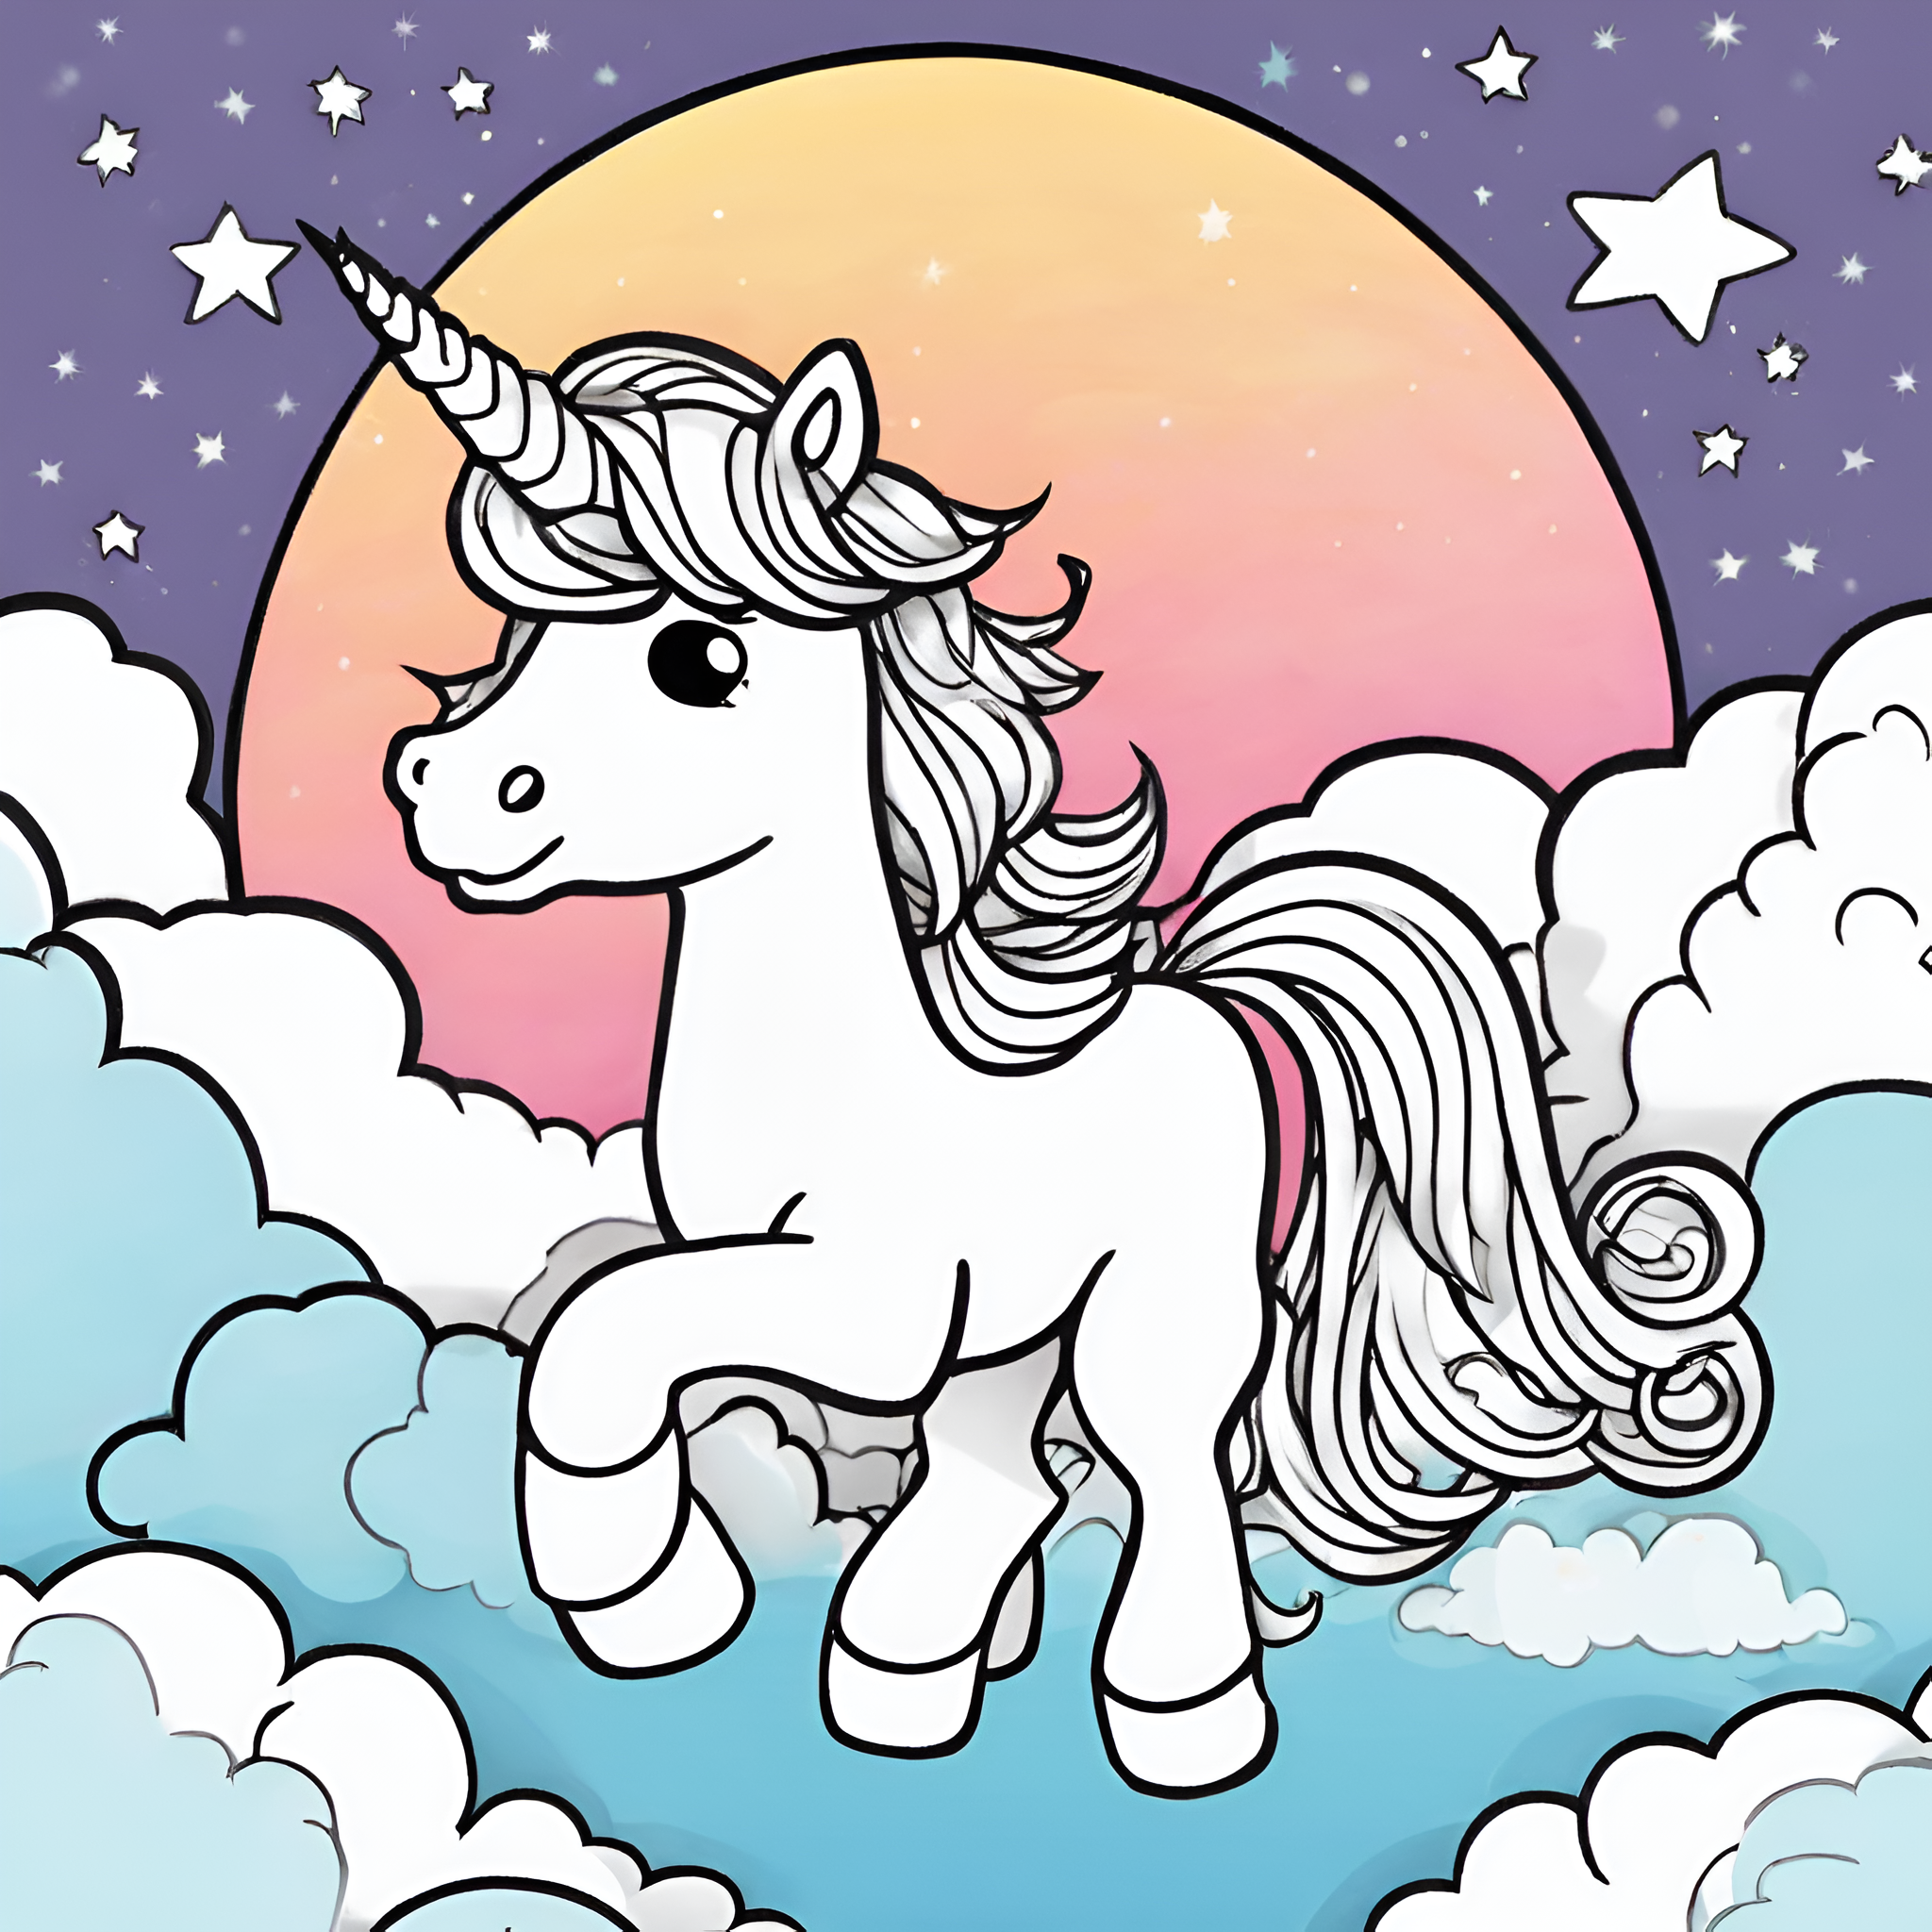 Colorful and adorable unicorn illustration on Craiyon